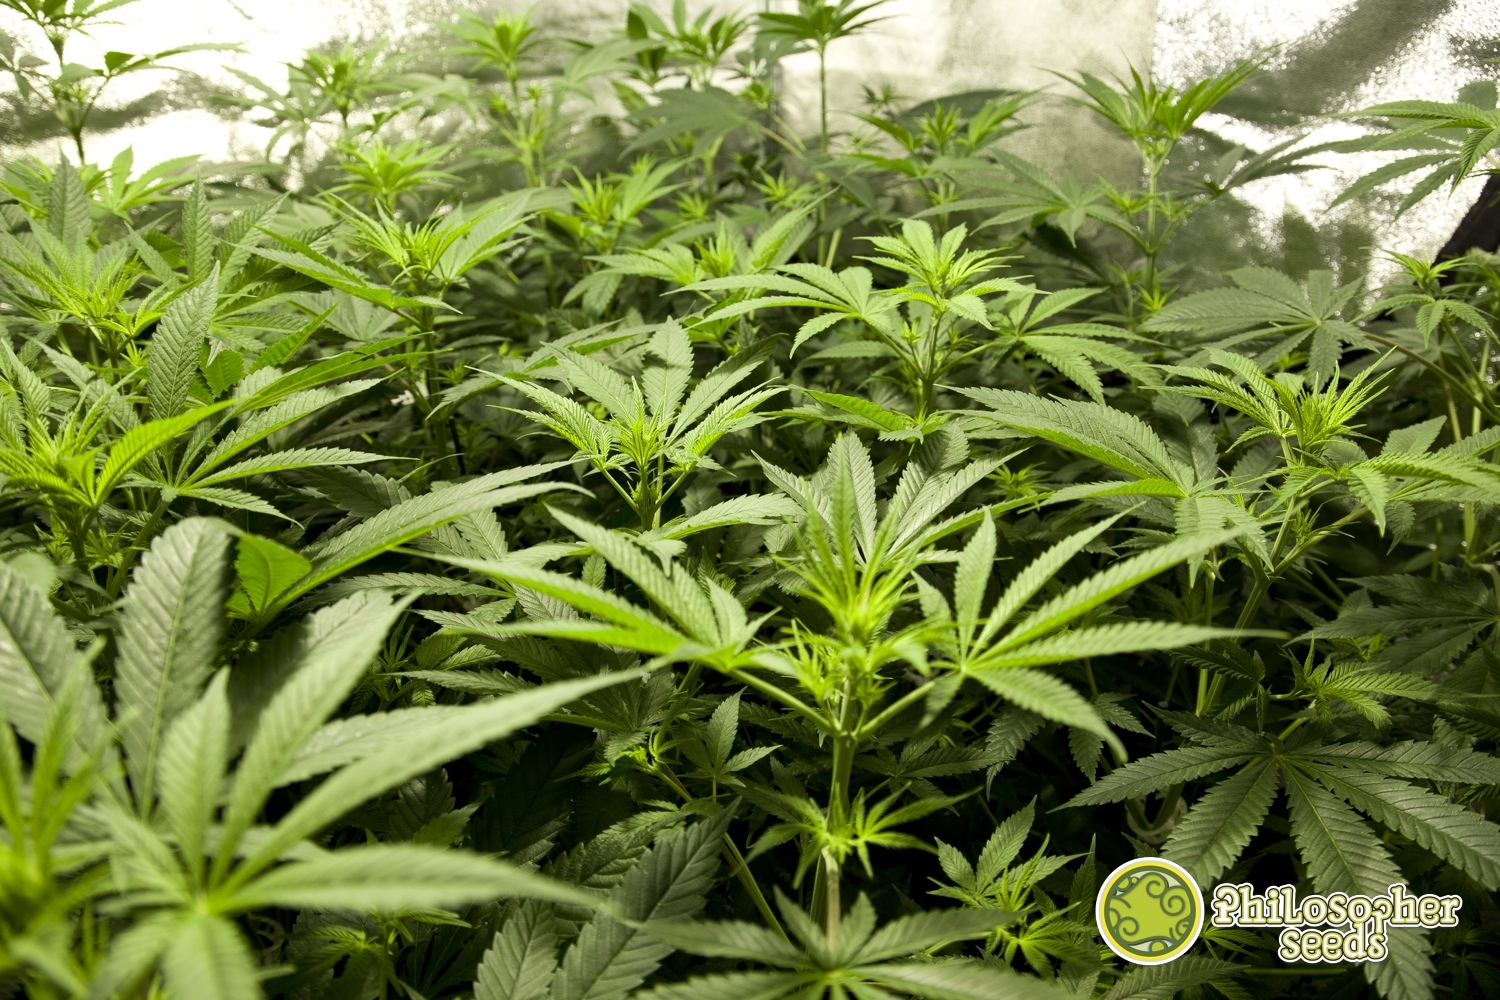 The top three most productive marijuana strains